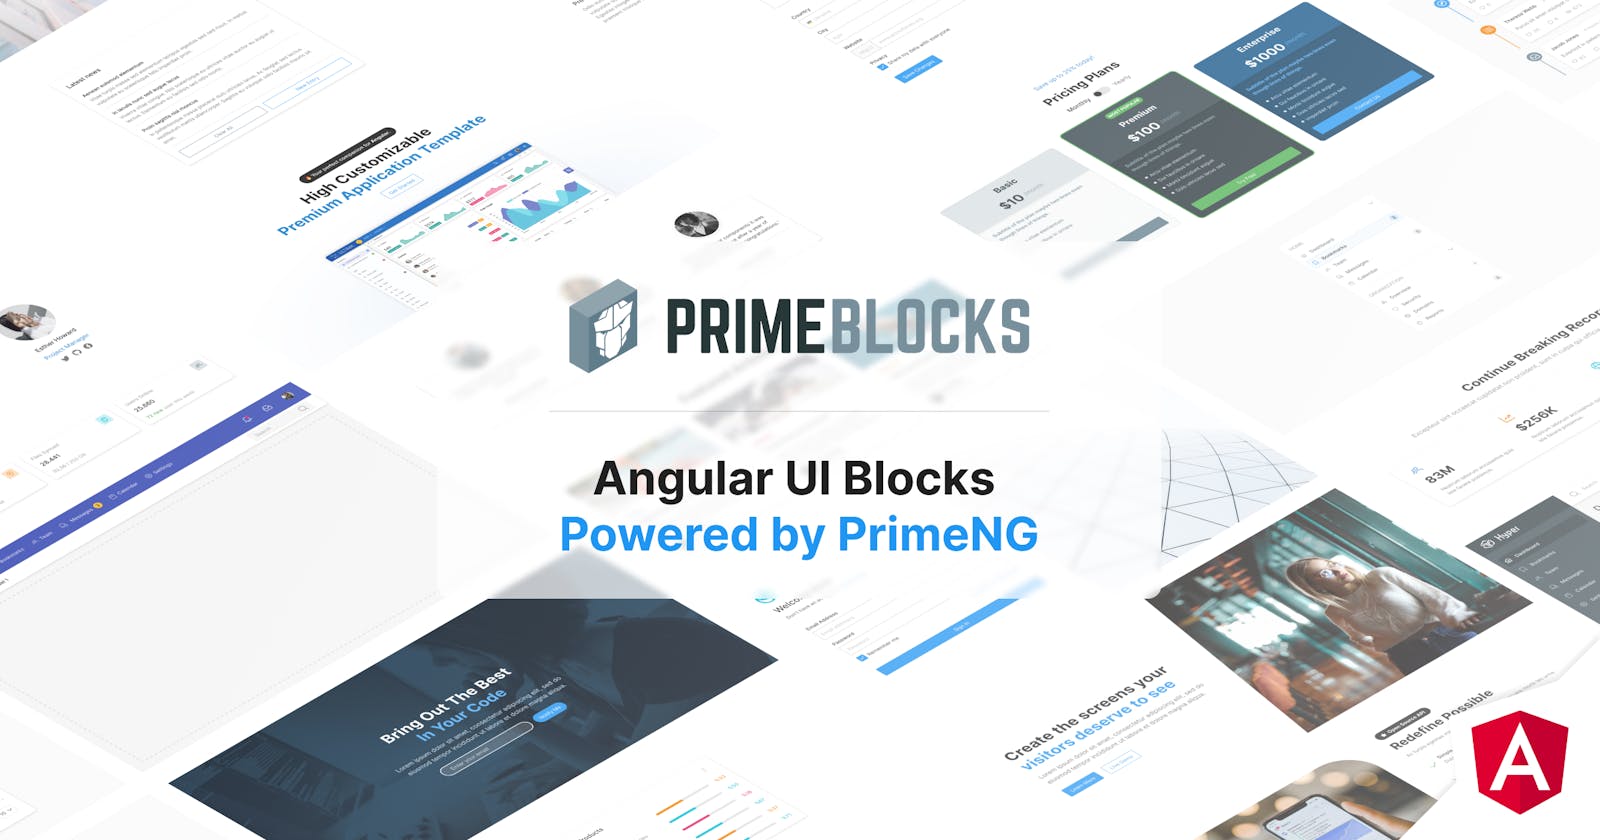 Introducing PrimeBlocks For PrimeNG